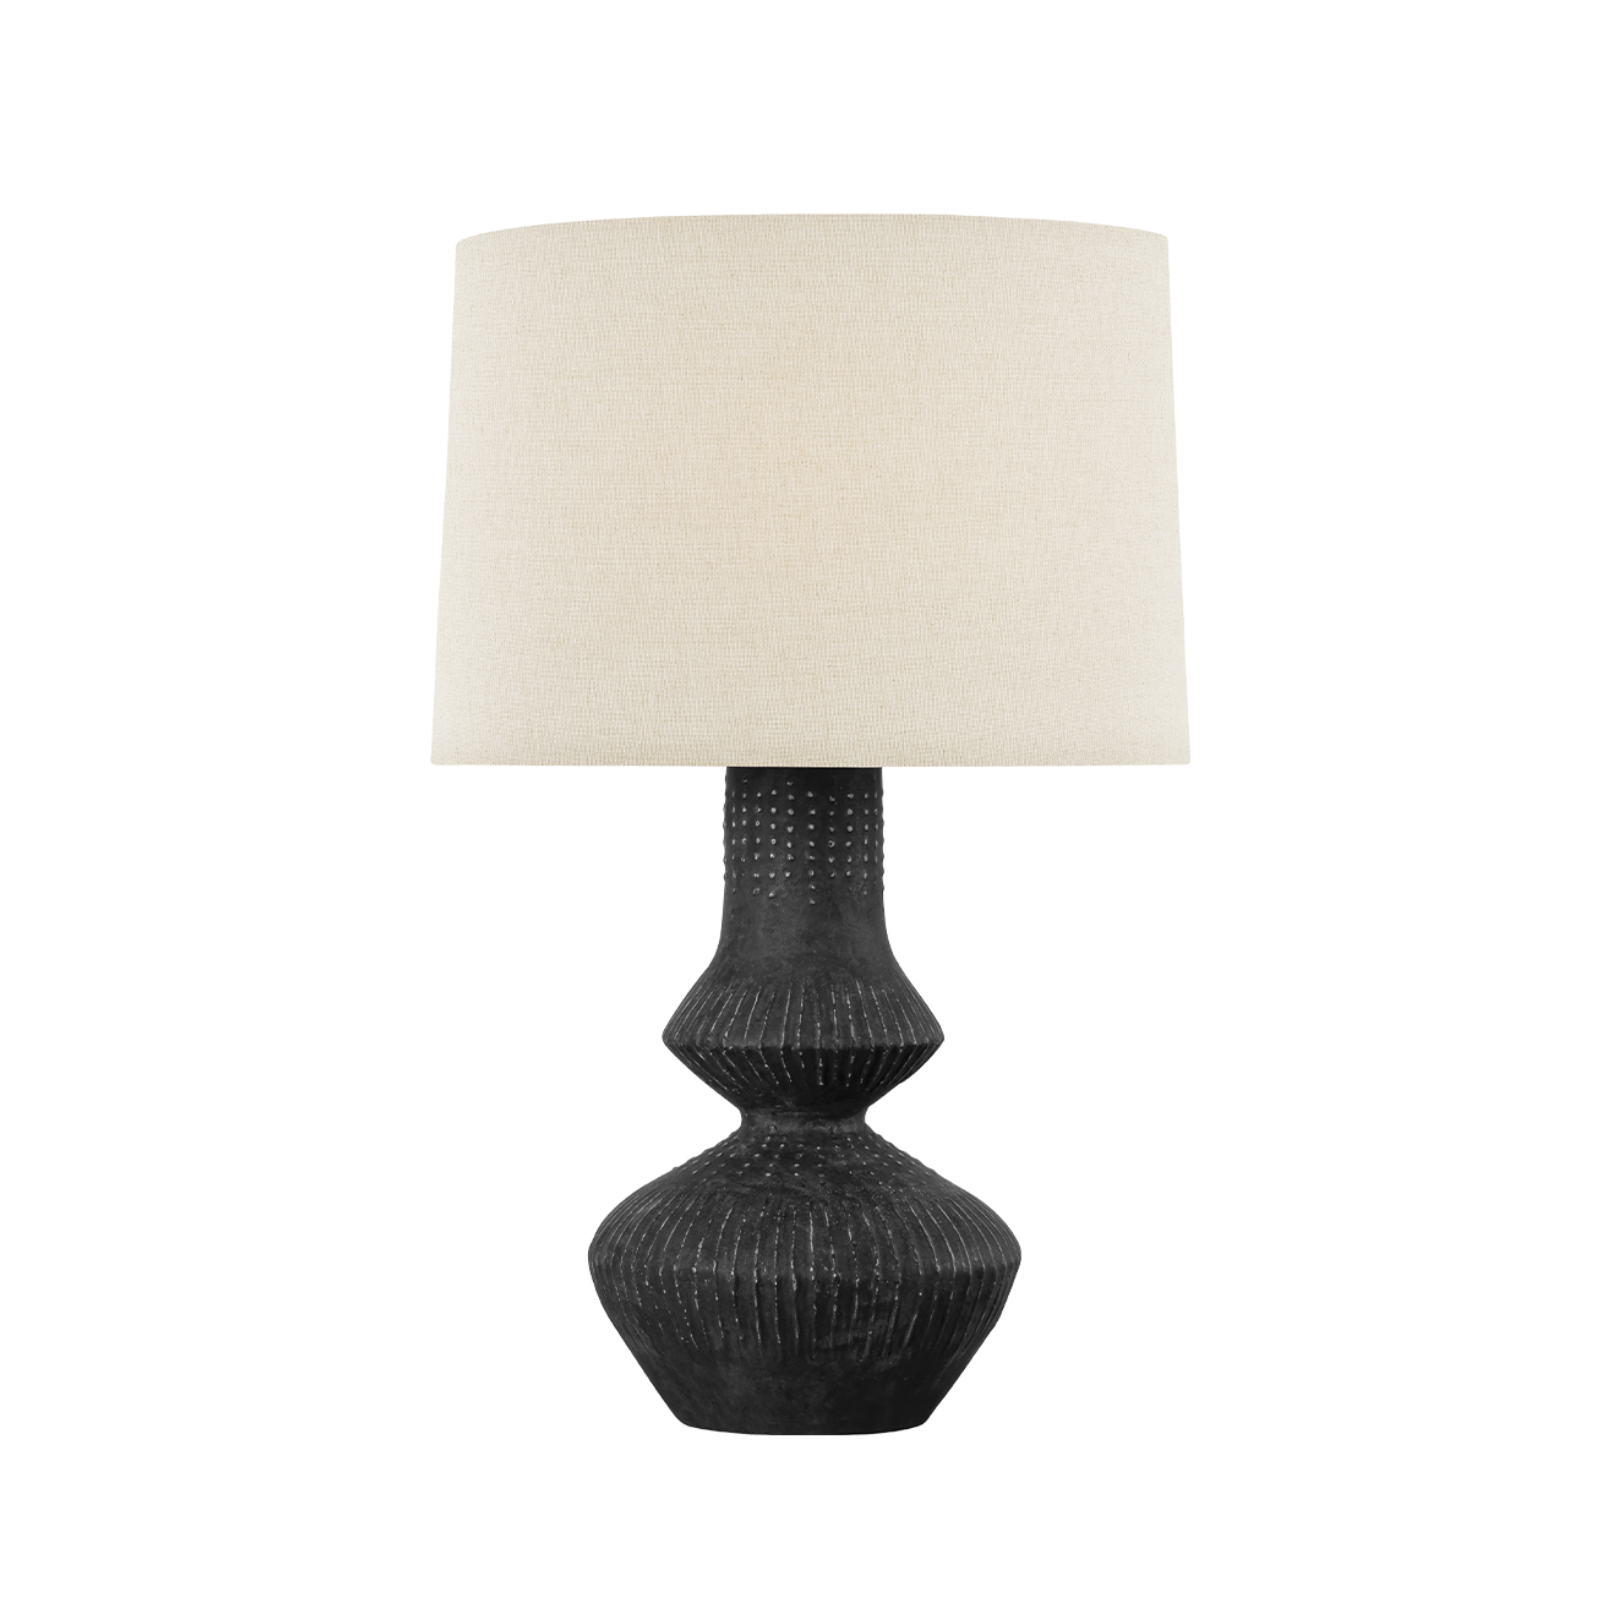 Ancram Table Lamp